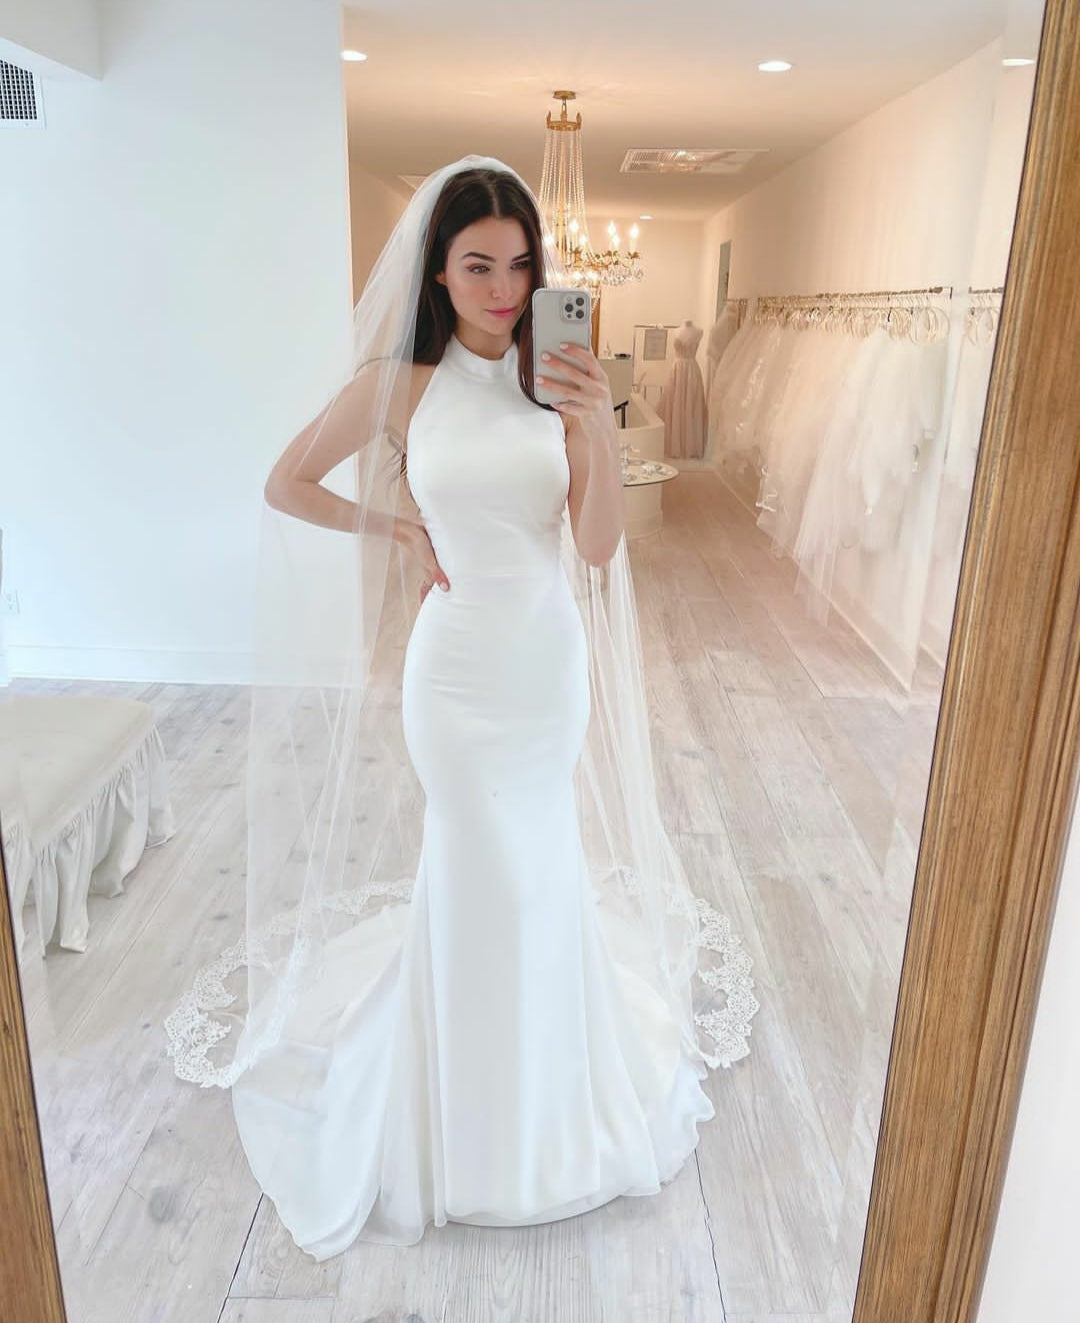 LTP0803,Mermaid white halter wedding gown satin long wedding dresses